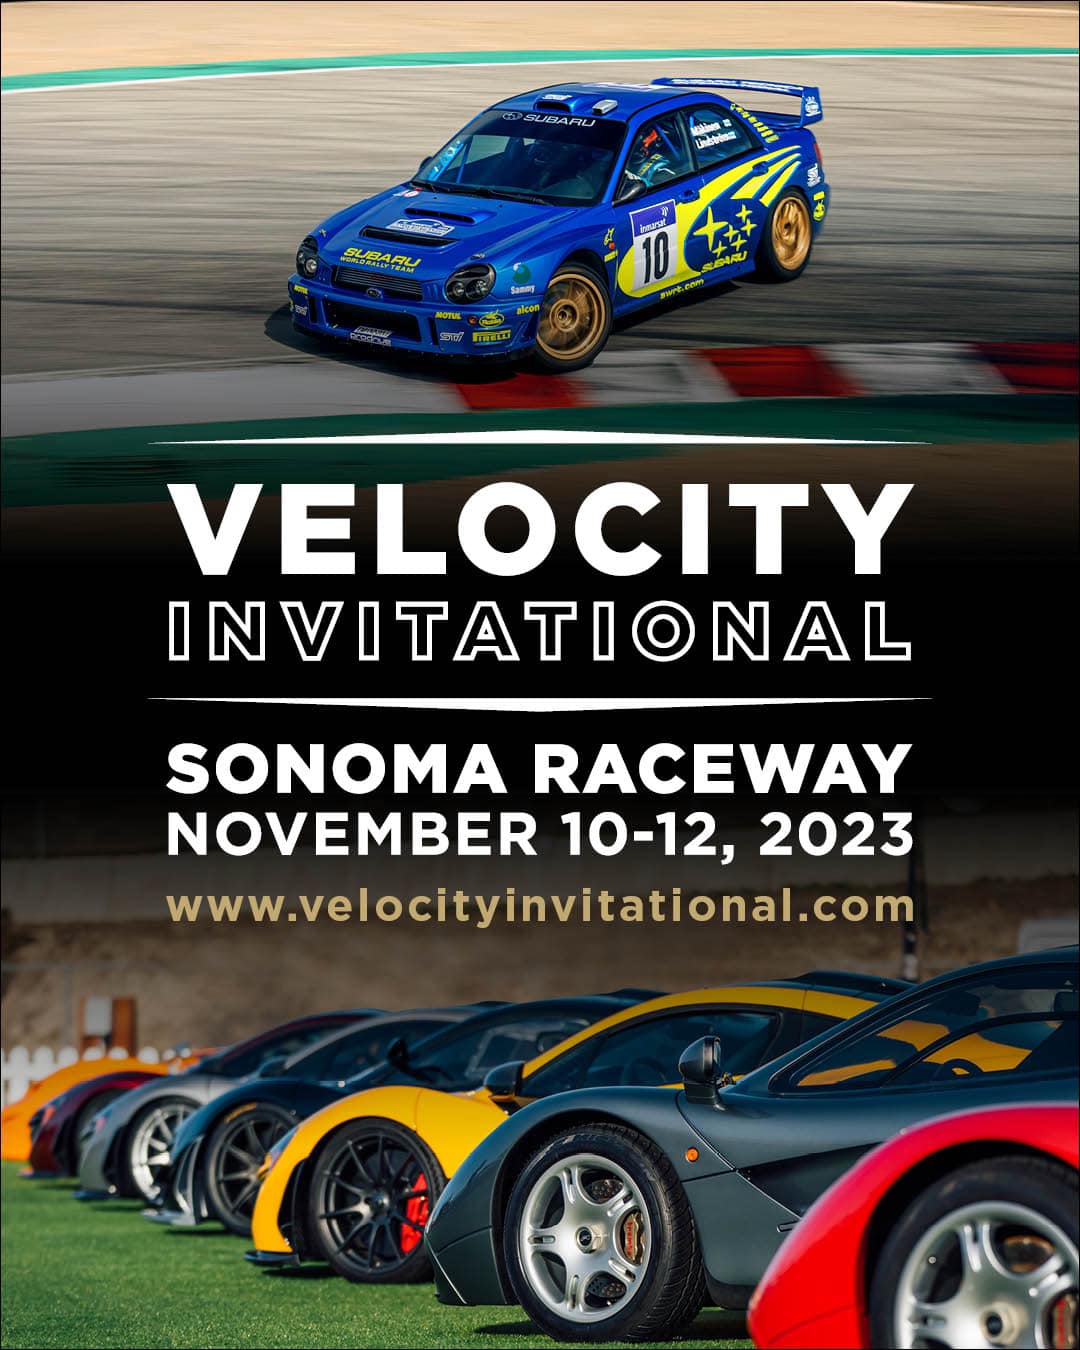 Velocity Invitational